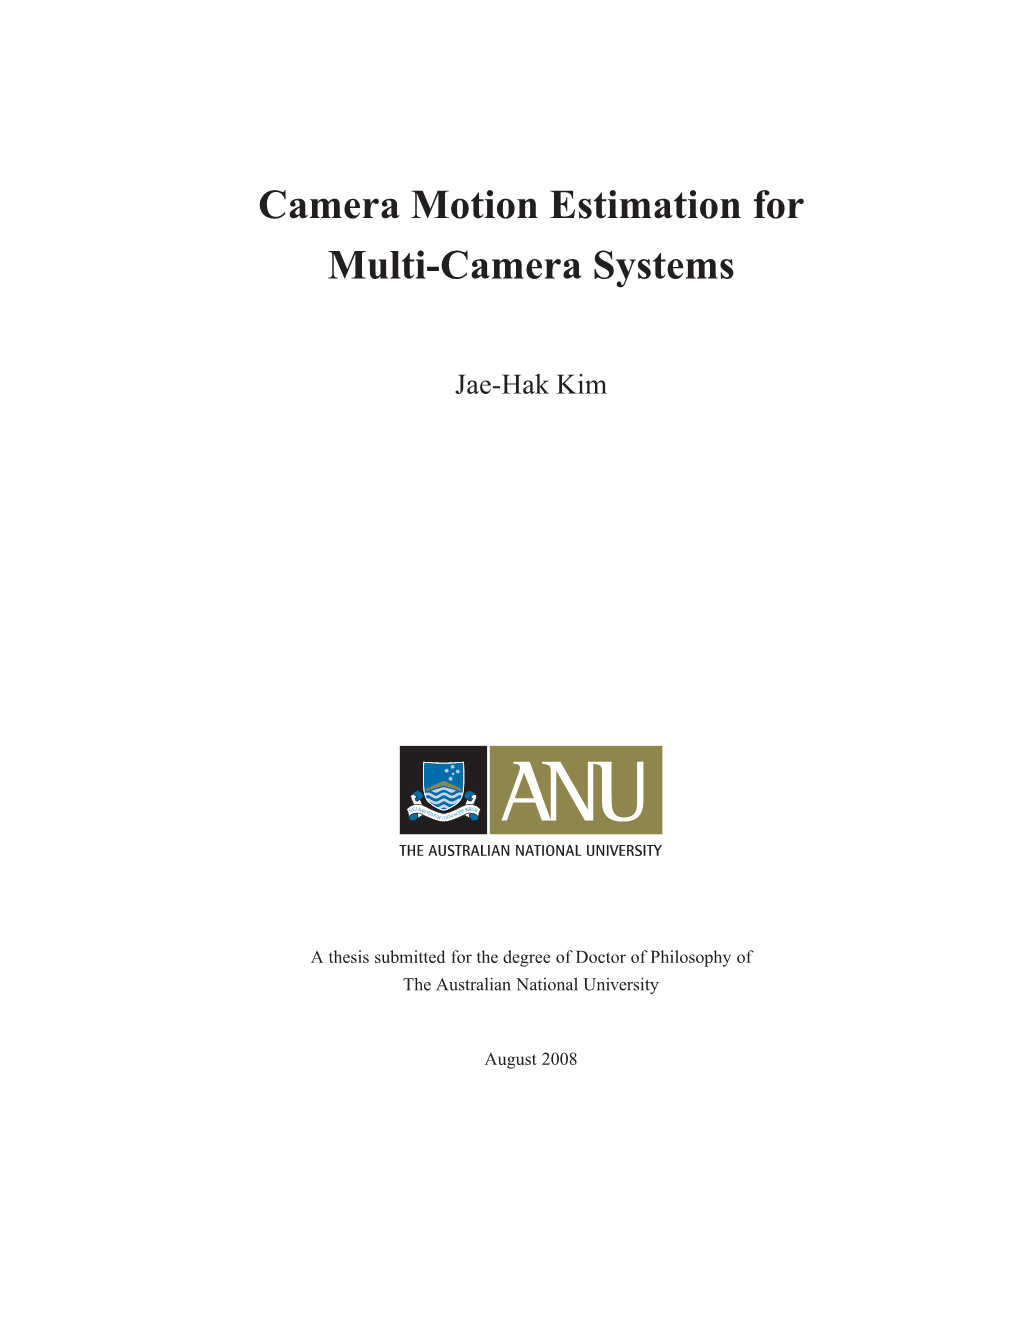 Camera Motion Estimation for Multi-Camera Systems